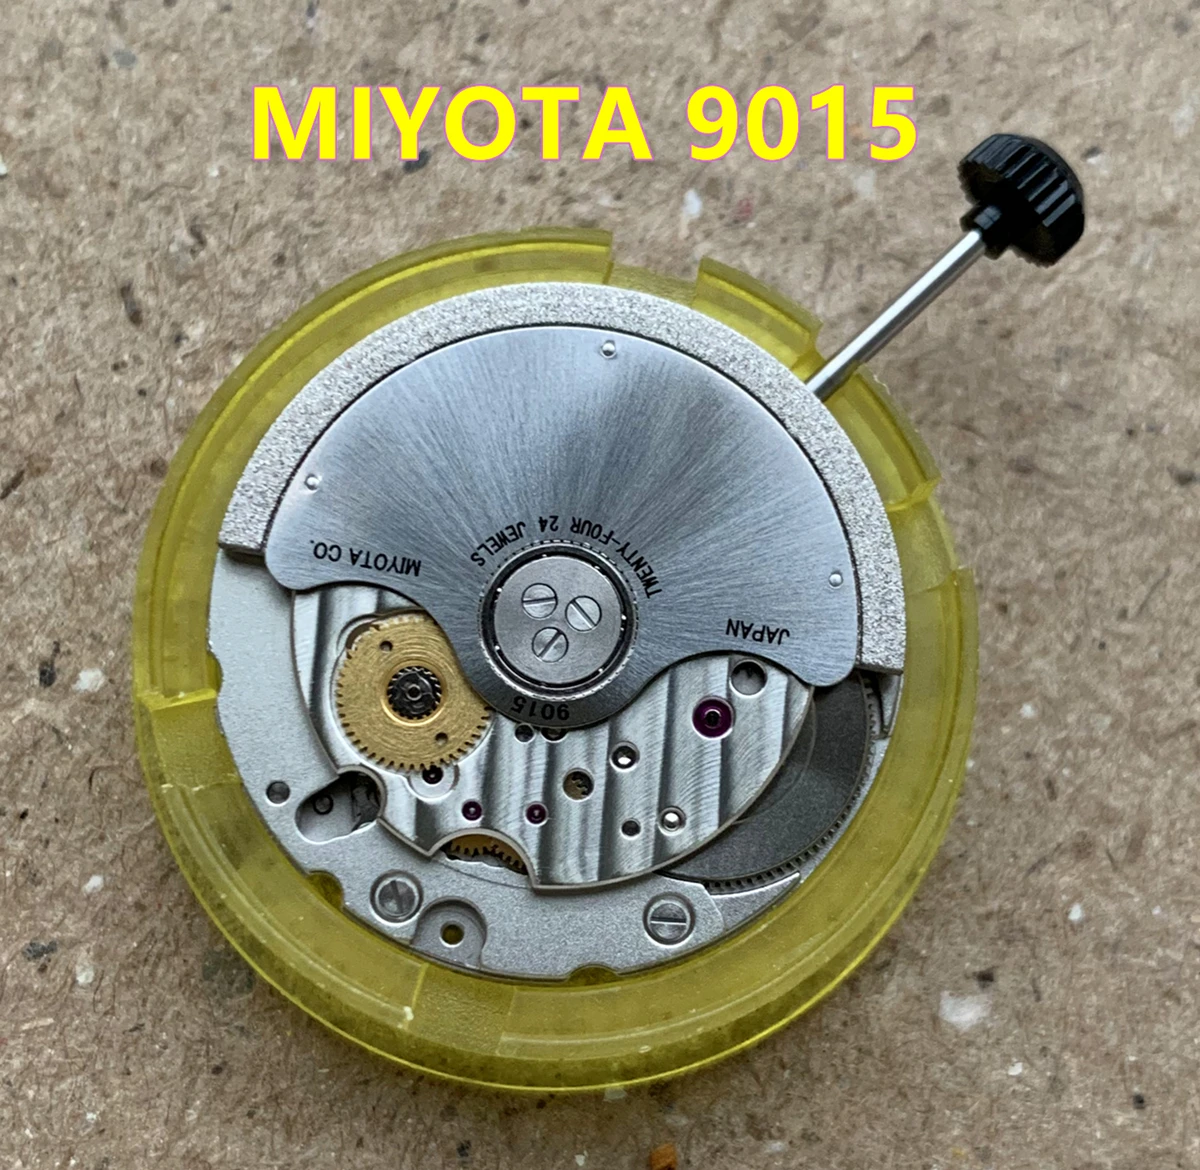 

Japan Original Miyota 9015 Mechanical Movement Ultra Thin 24 Jewels Automatic Self-winding Watchmaker Replacement Mechanism